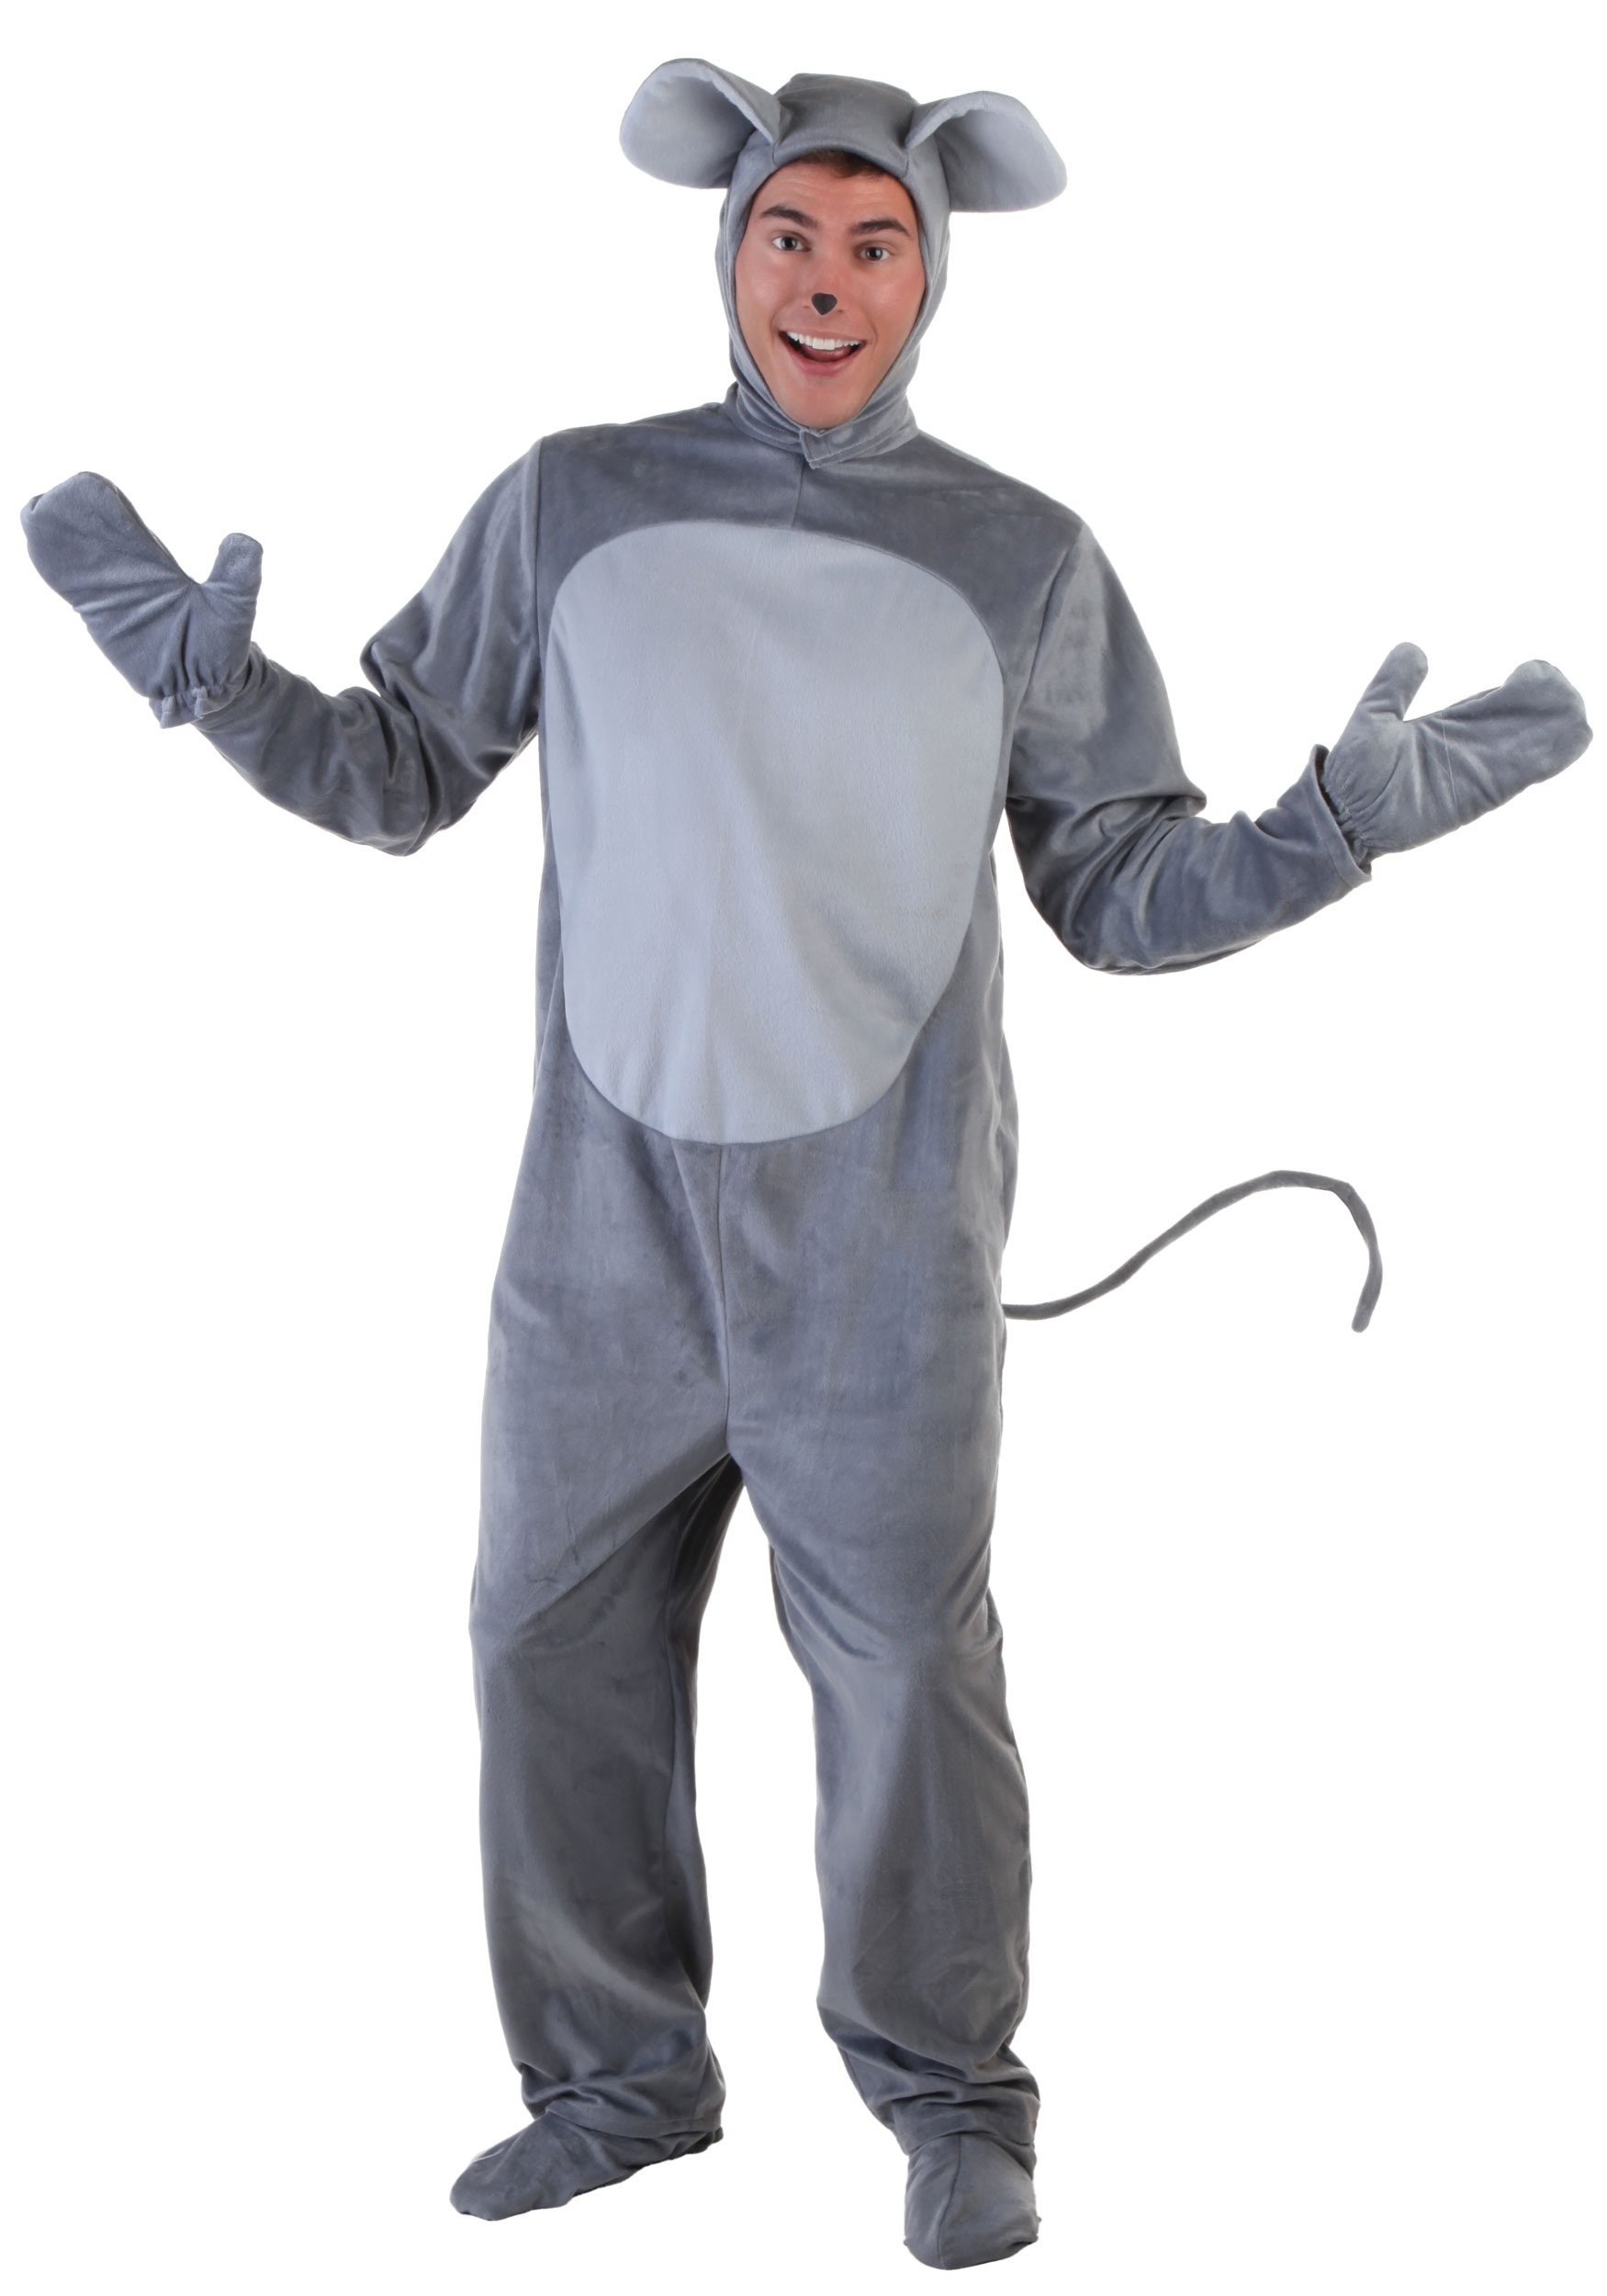 Photos - Fancy Dress FUN Costumes Plus Size Mouse Adults Costume Gray FUN1172PL